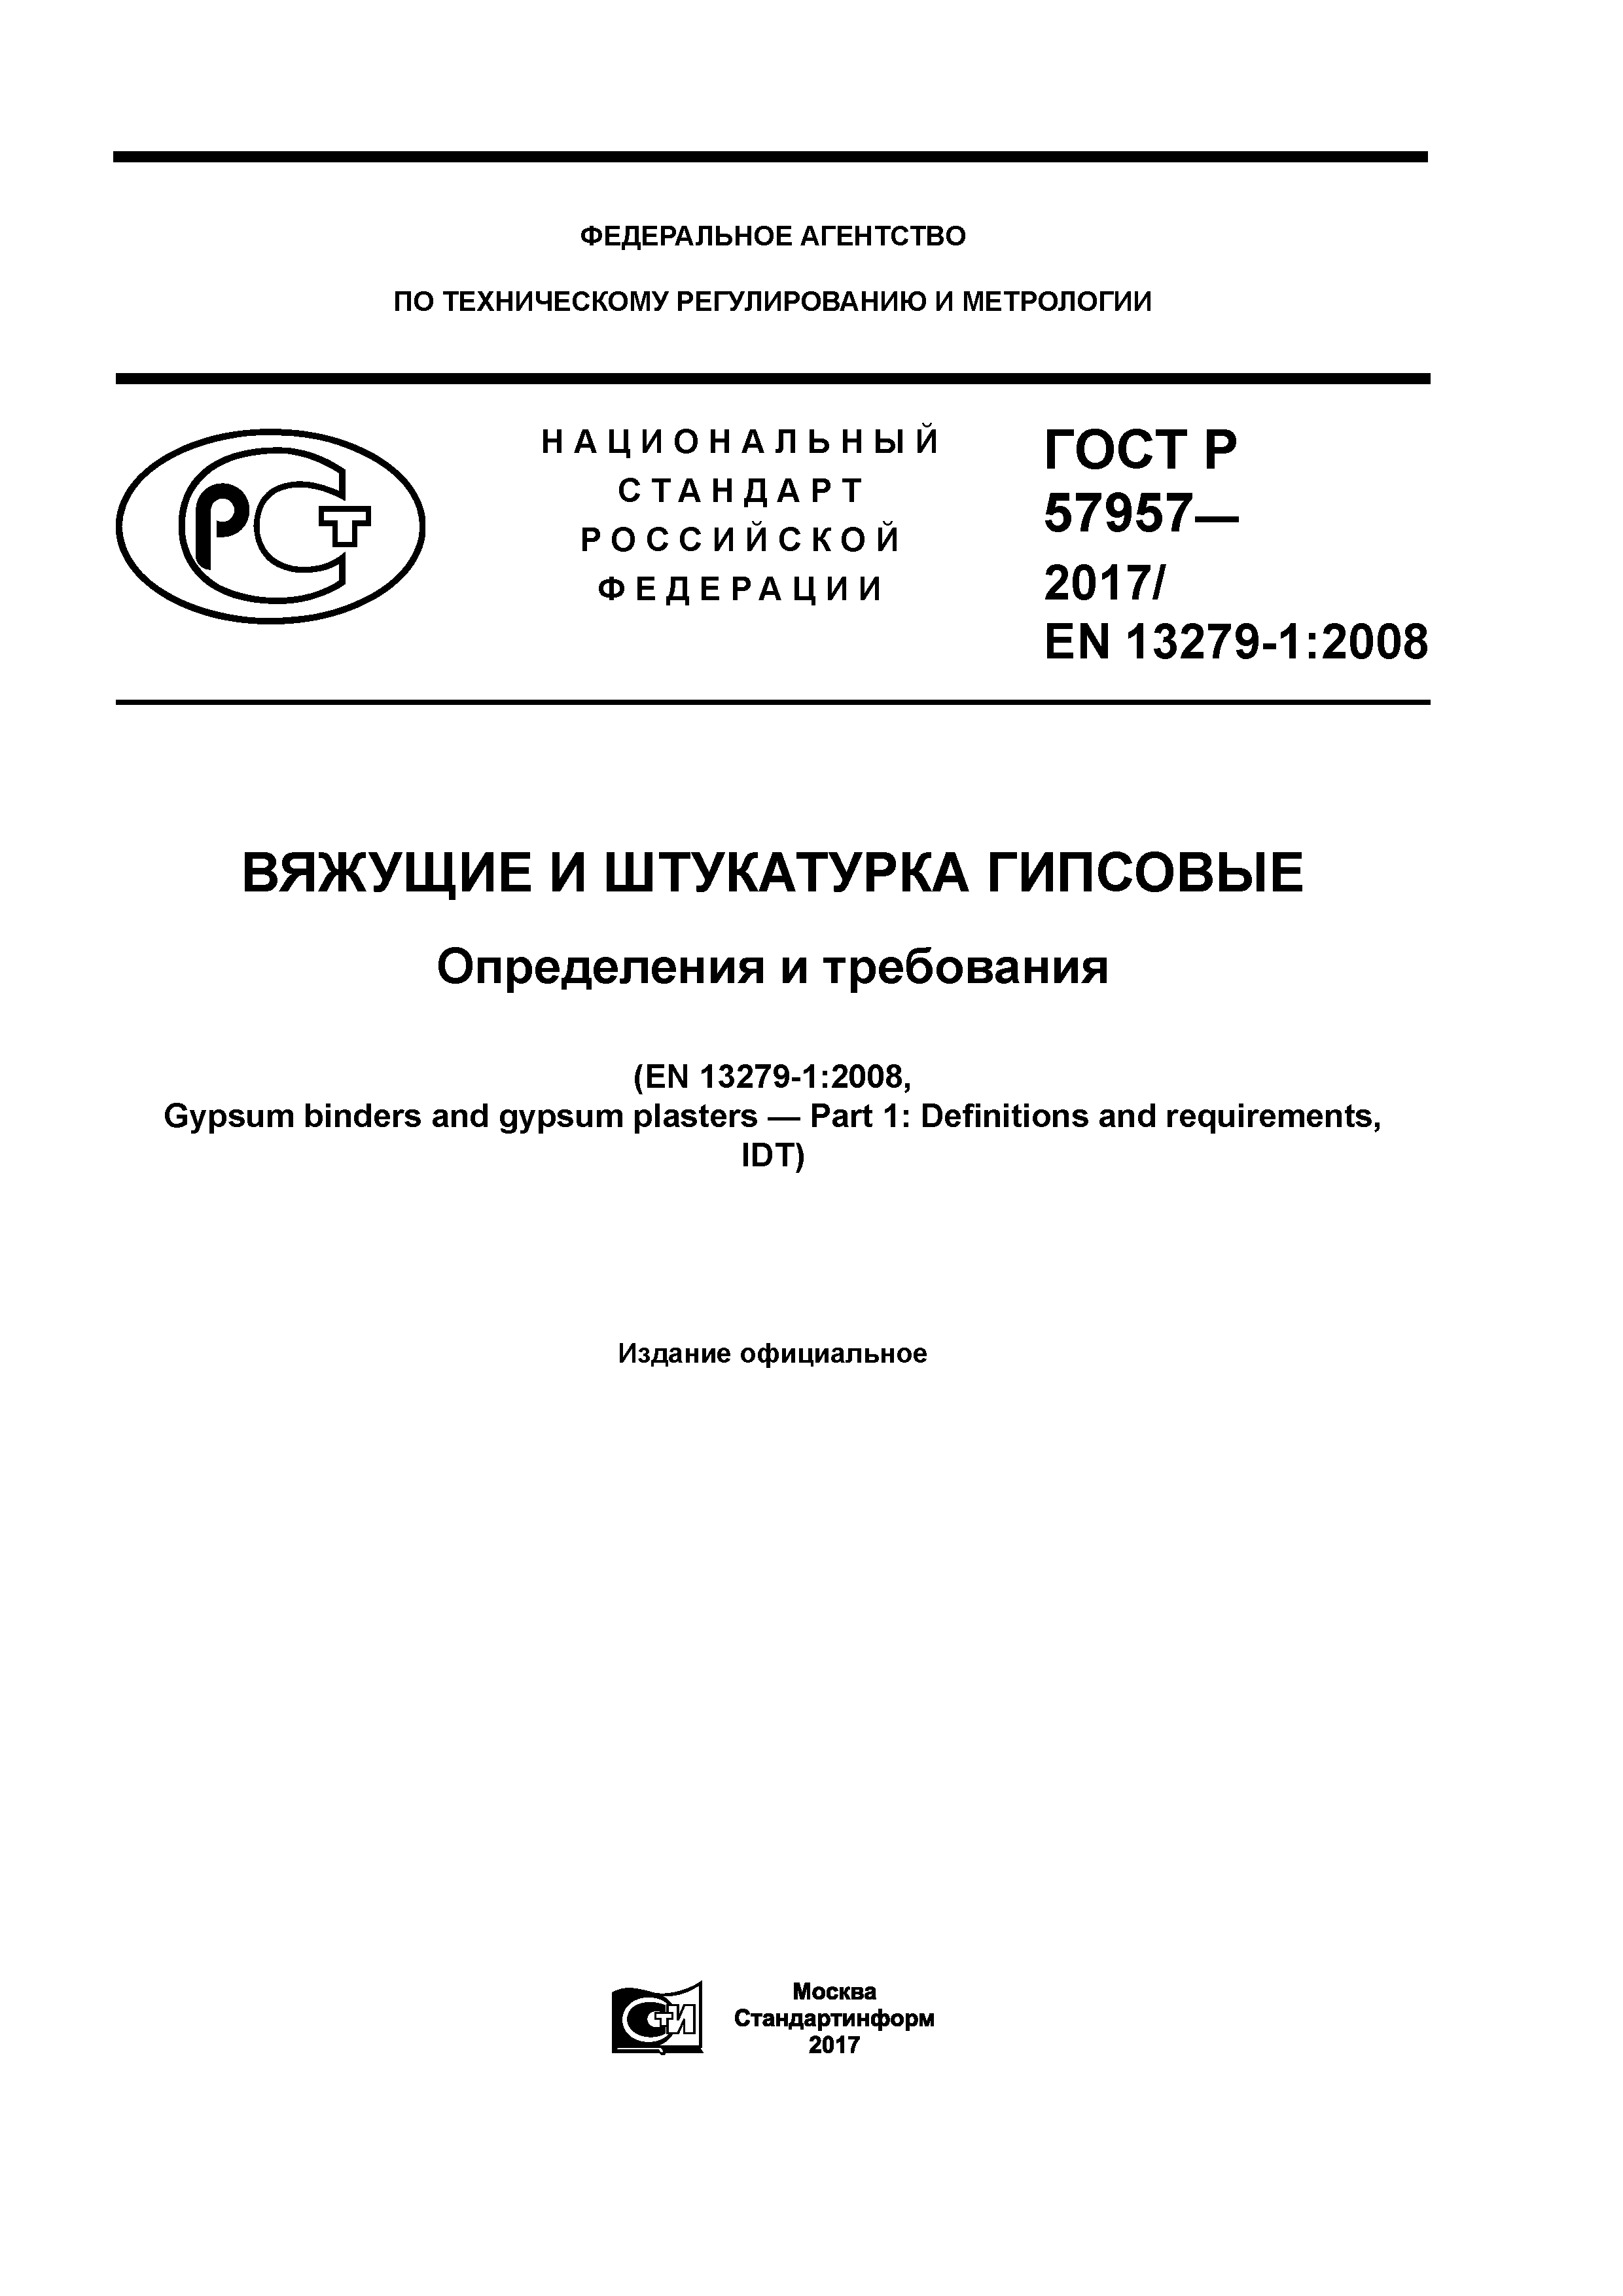 ГОСТ Р 57957-2017